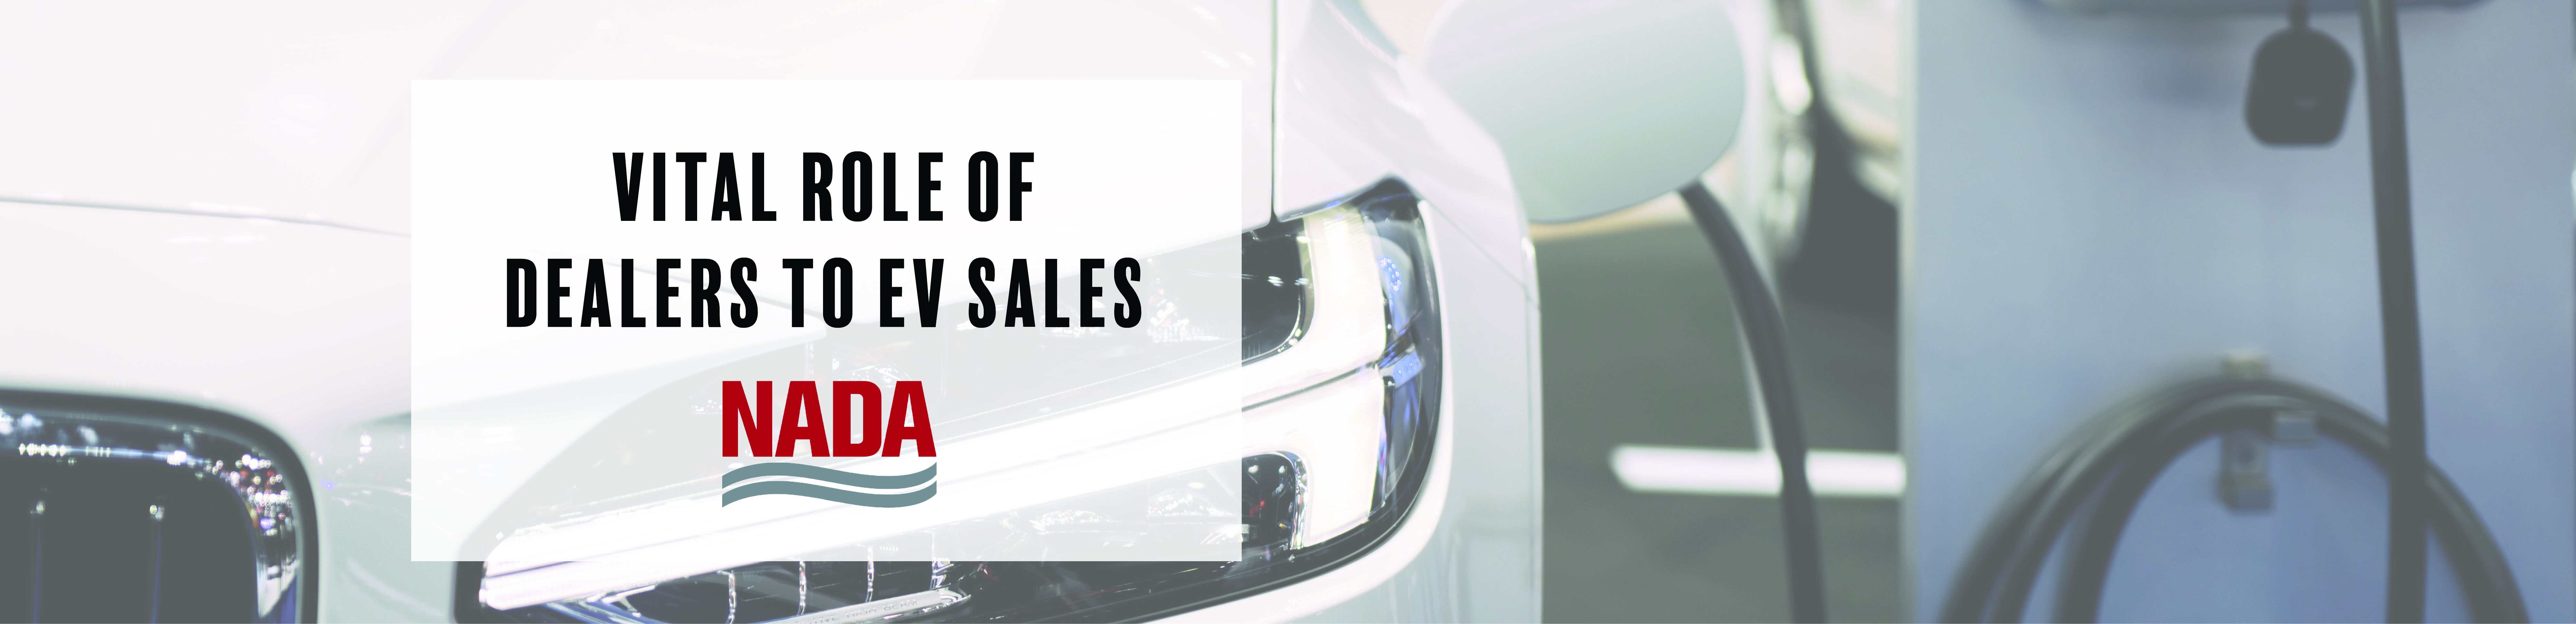 Vital Role of Dealers to EV Sales